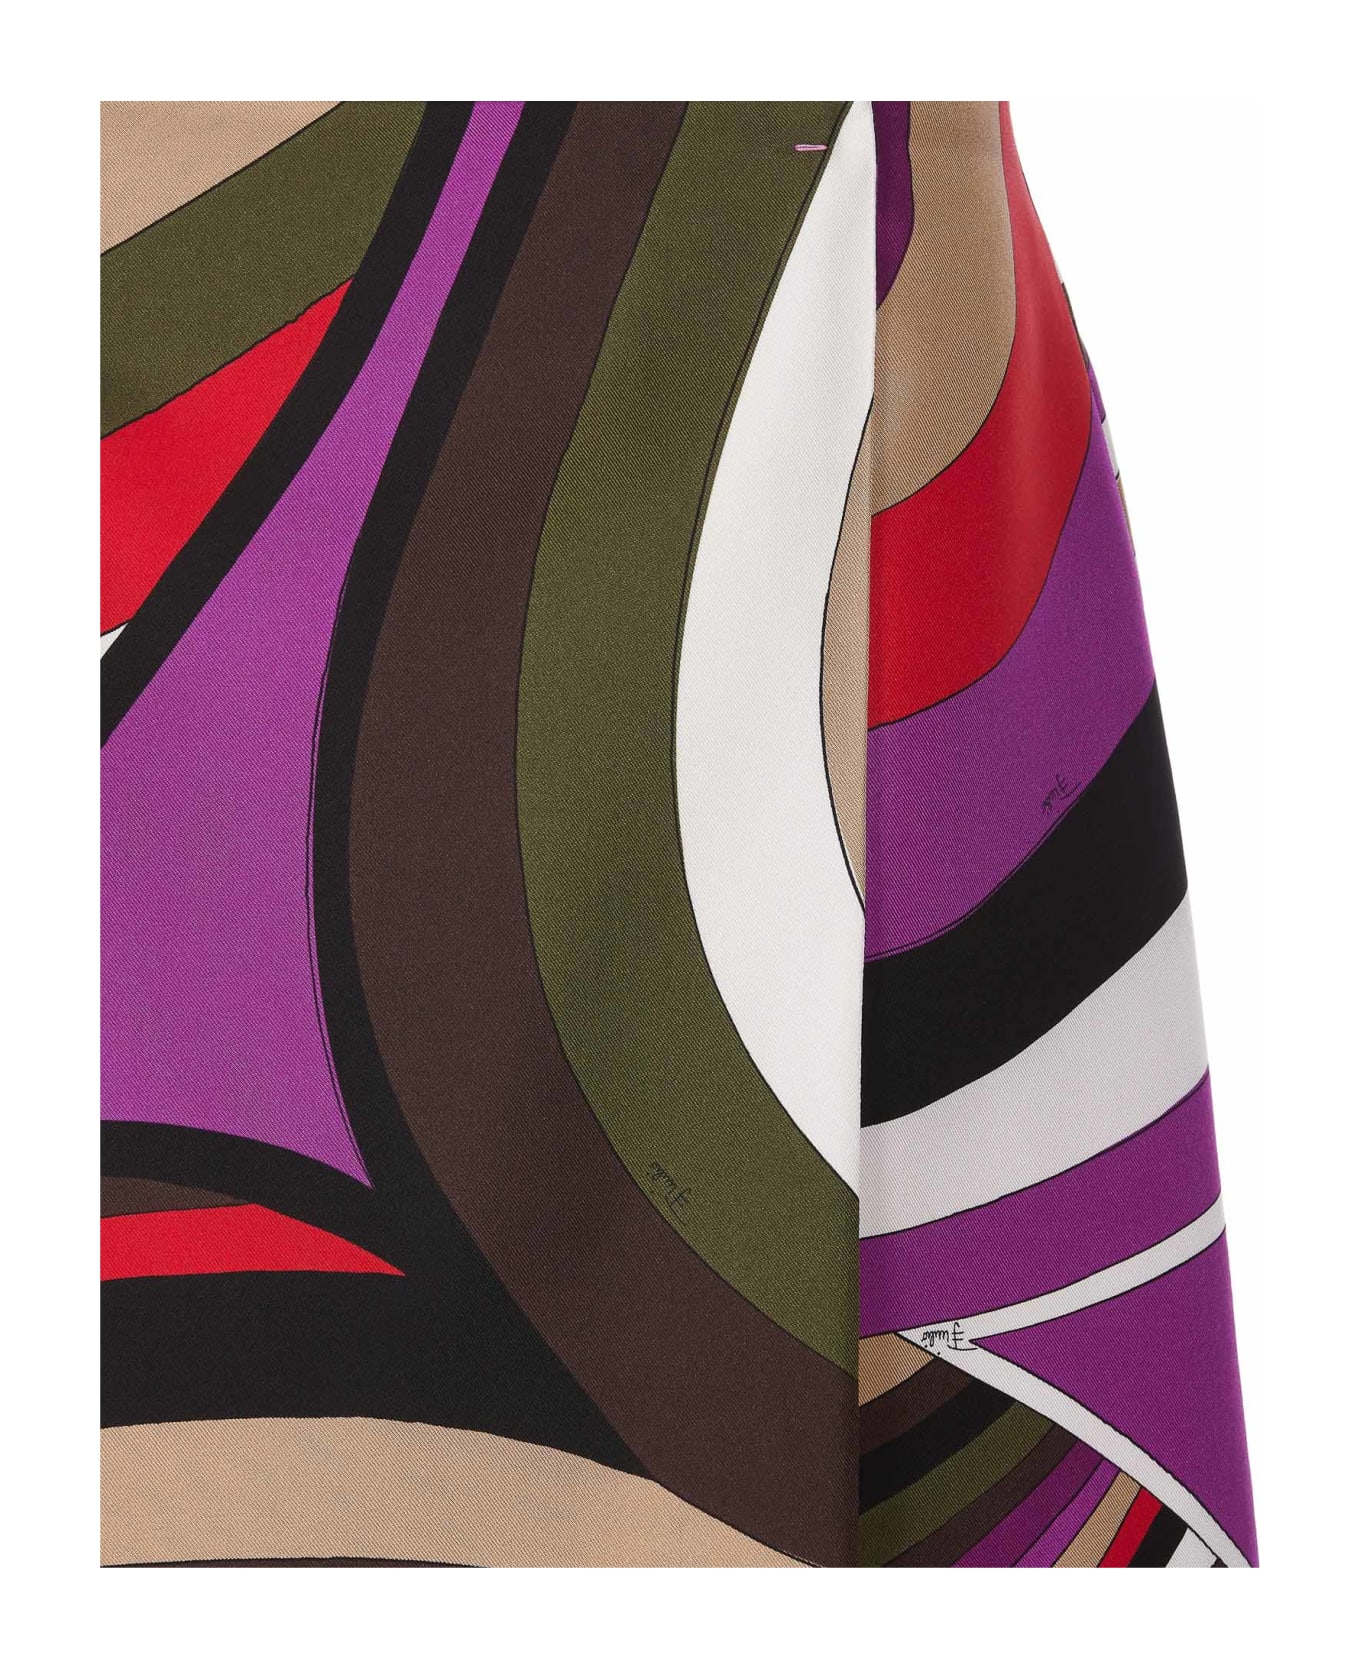 Pucci Marmo Print Silk Skirt - MultiColour